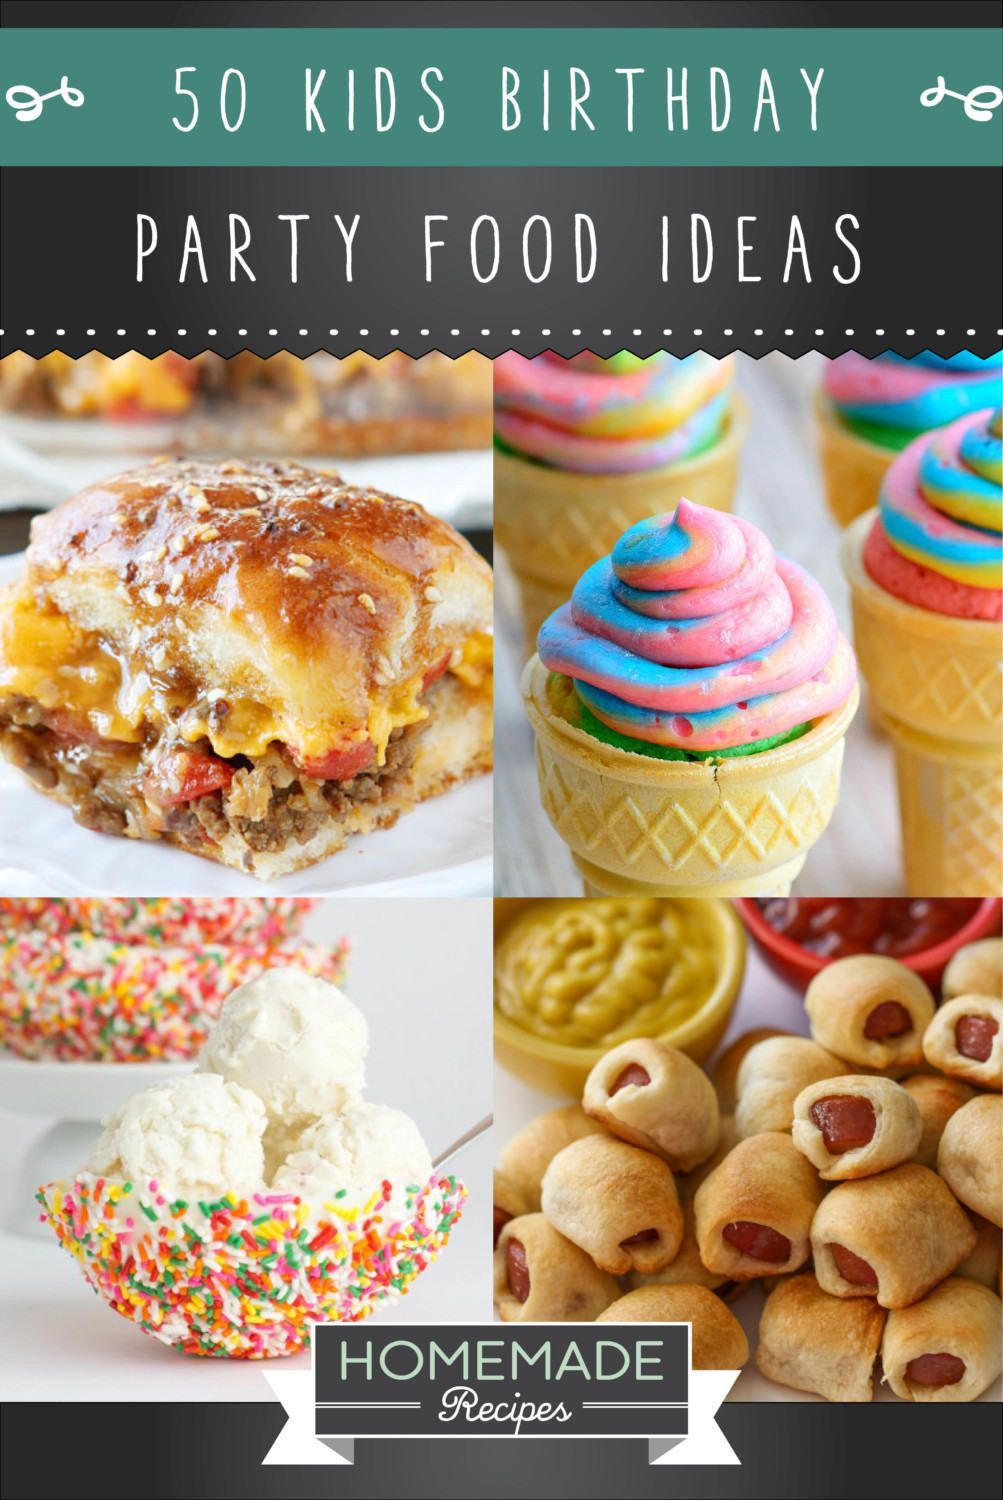 1St Birthday Party Food Ideas Recipes
 Kids Birthday Party Food Ideas They Won t Snub